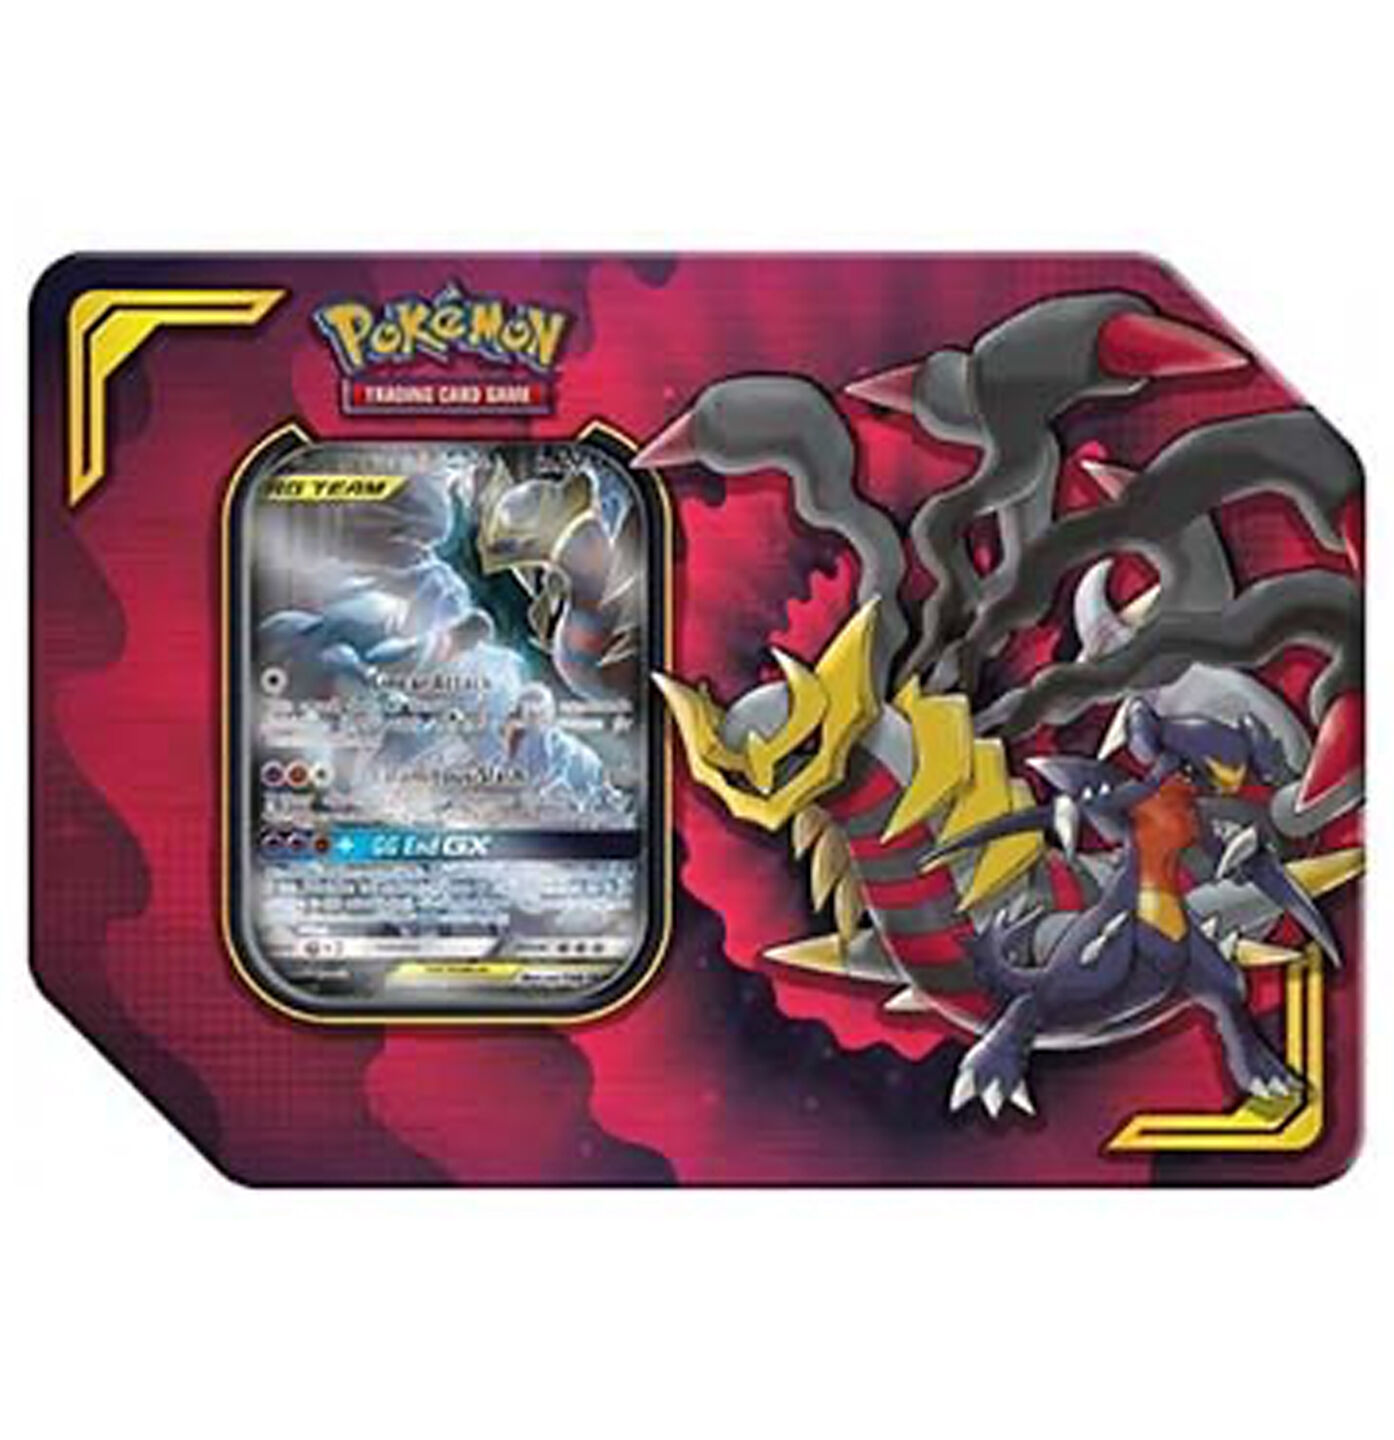 Pokémon TAG TEAM Knackrack & Giratina GX Tin Box